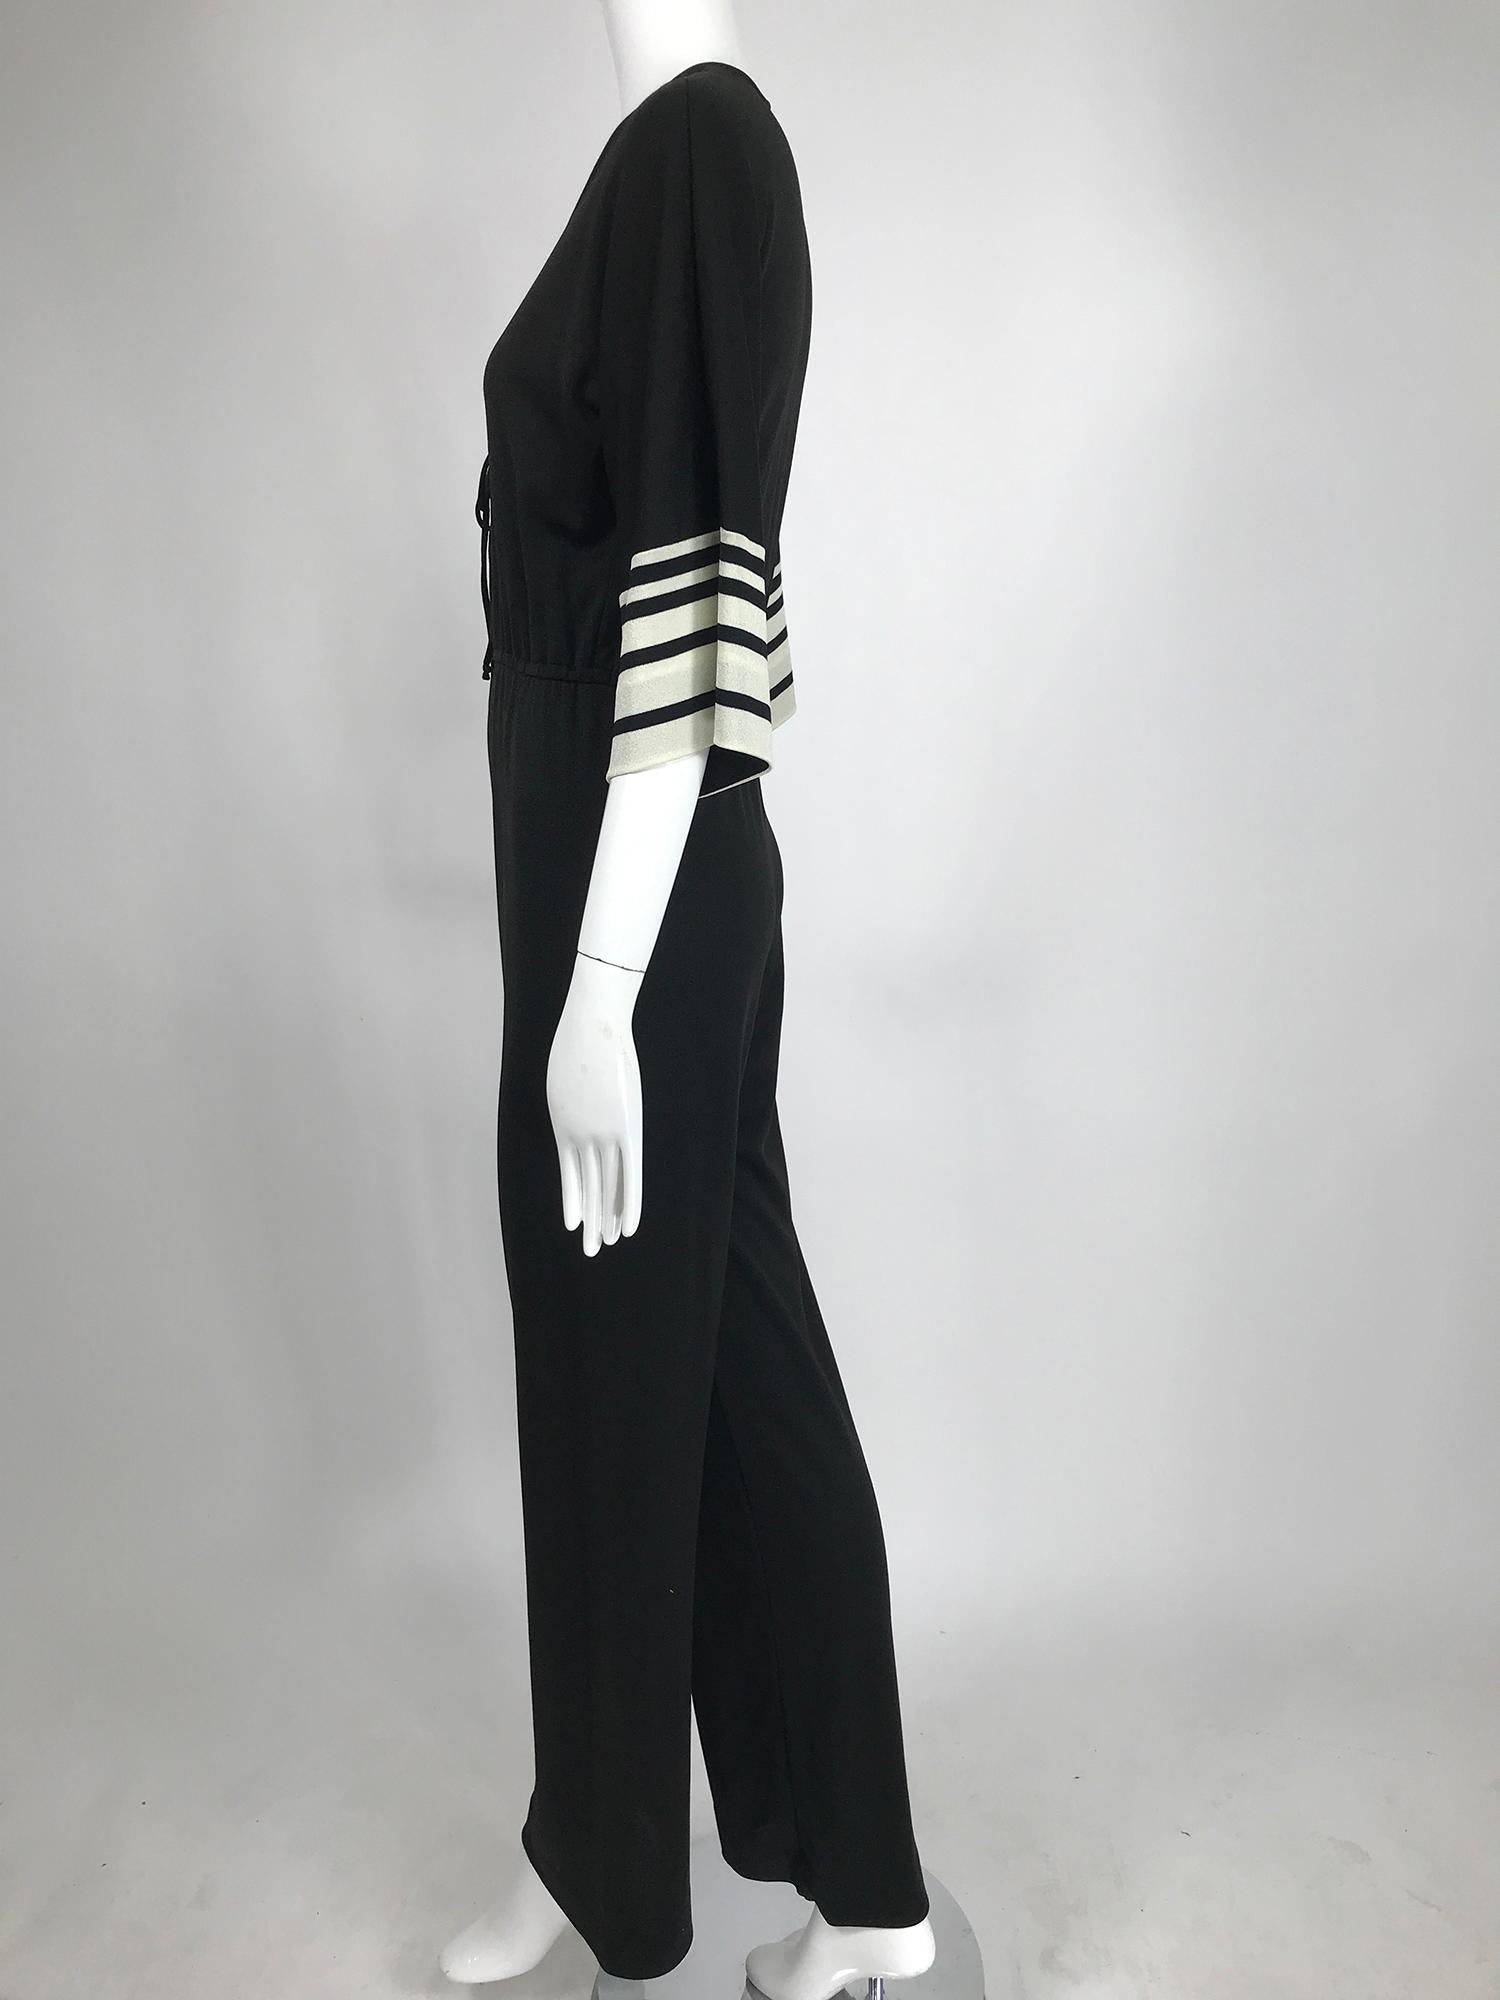 Vintage Clovis Ruffin Ruffinwear Black and White Jumpsuit 1970s 2